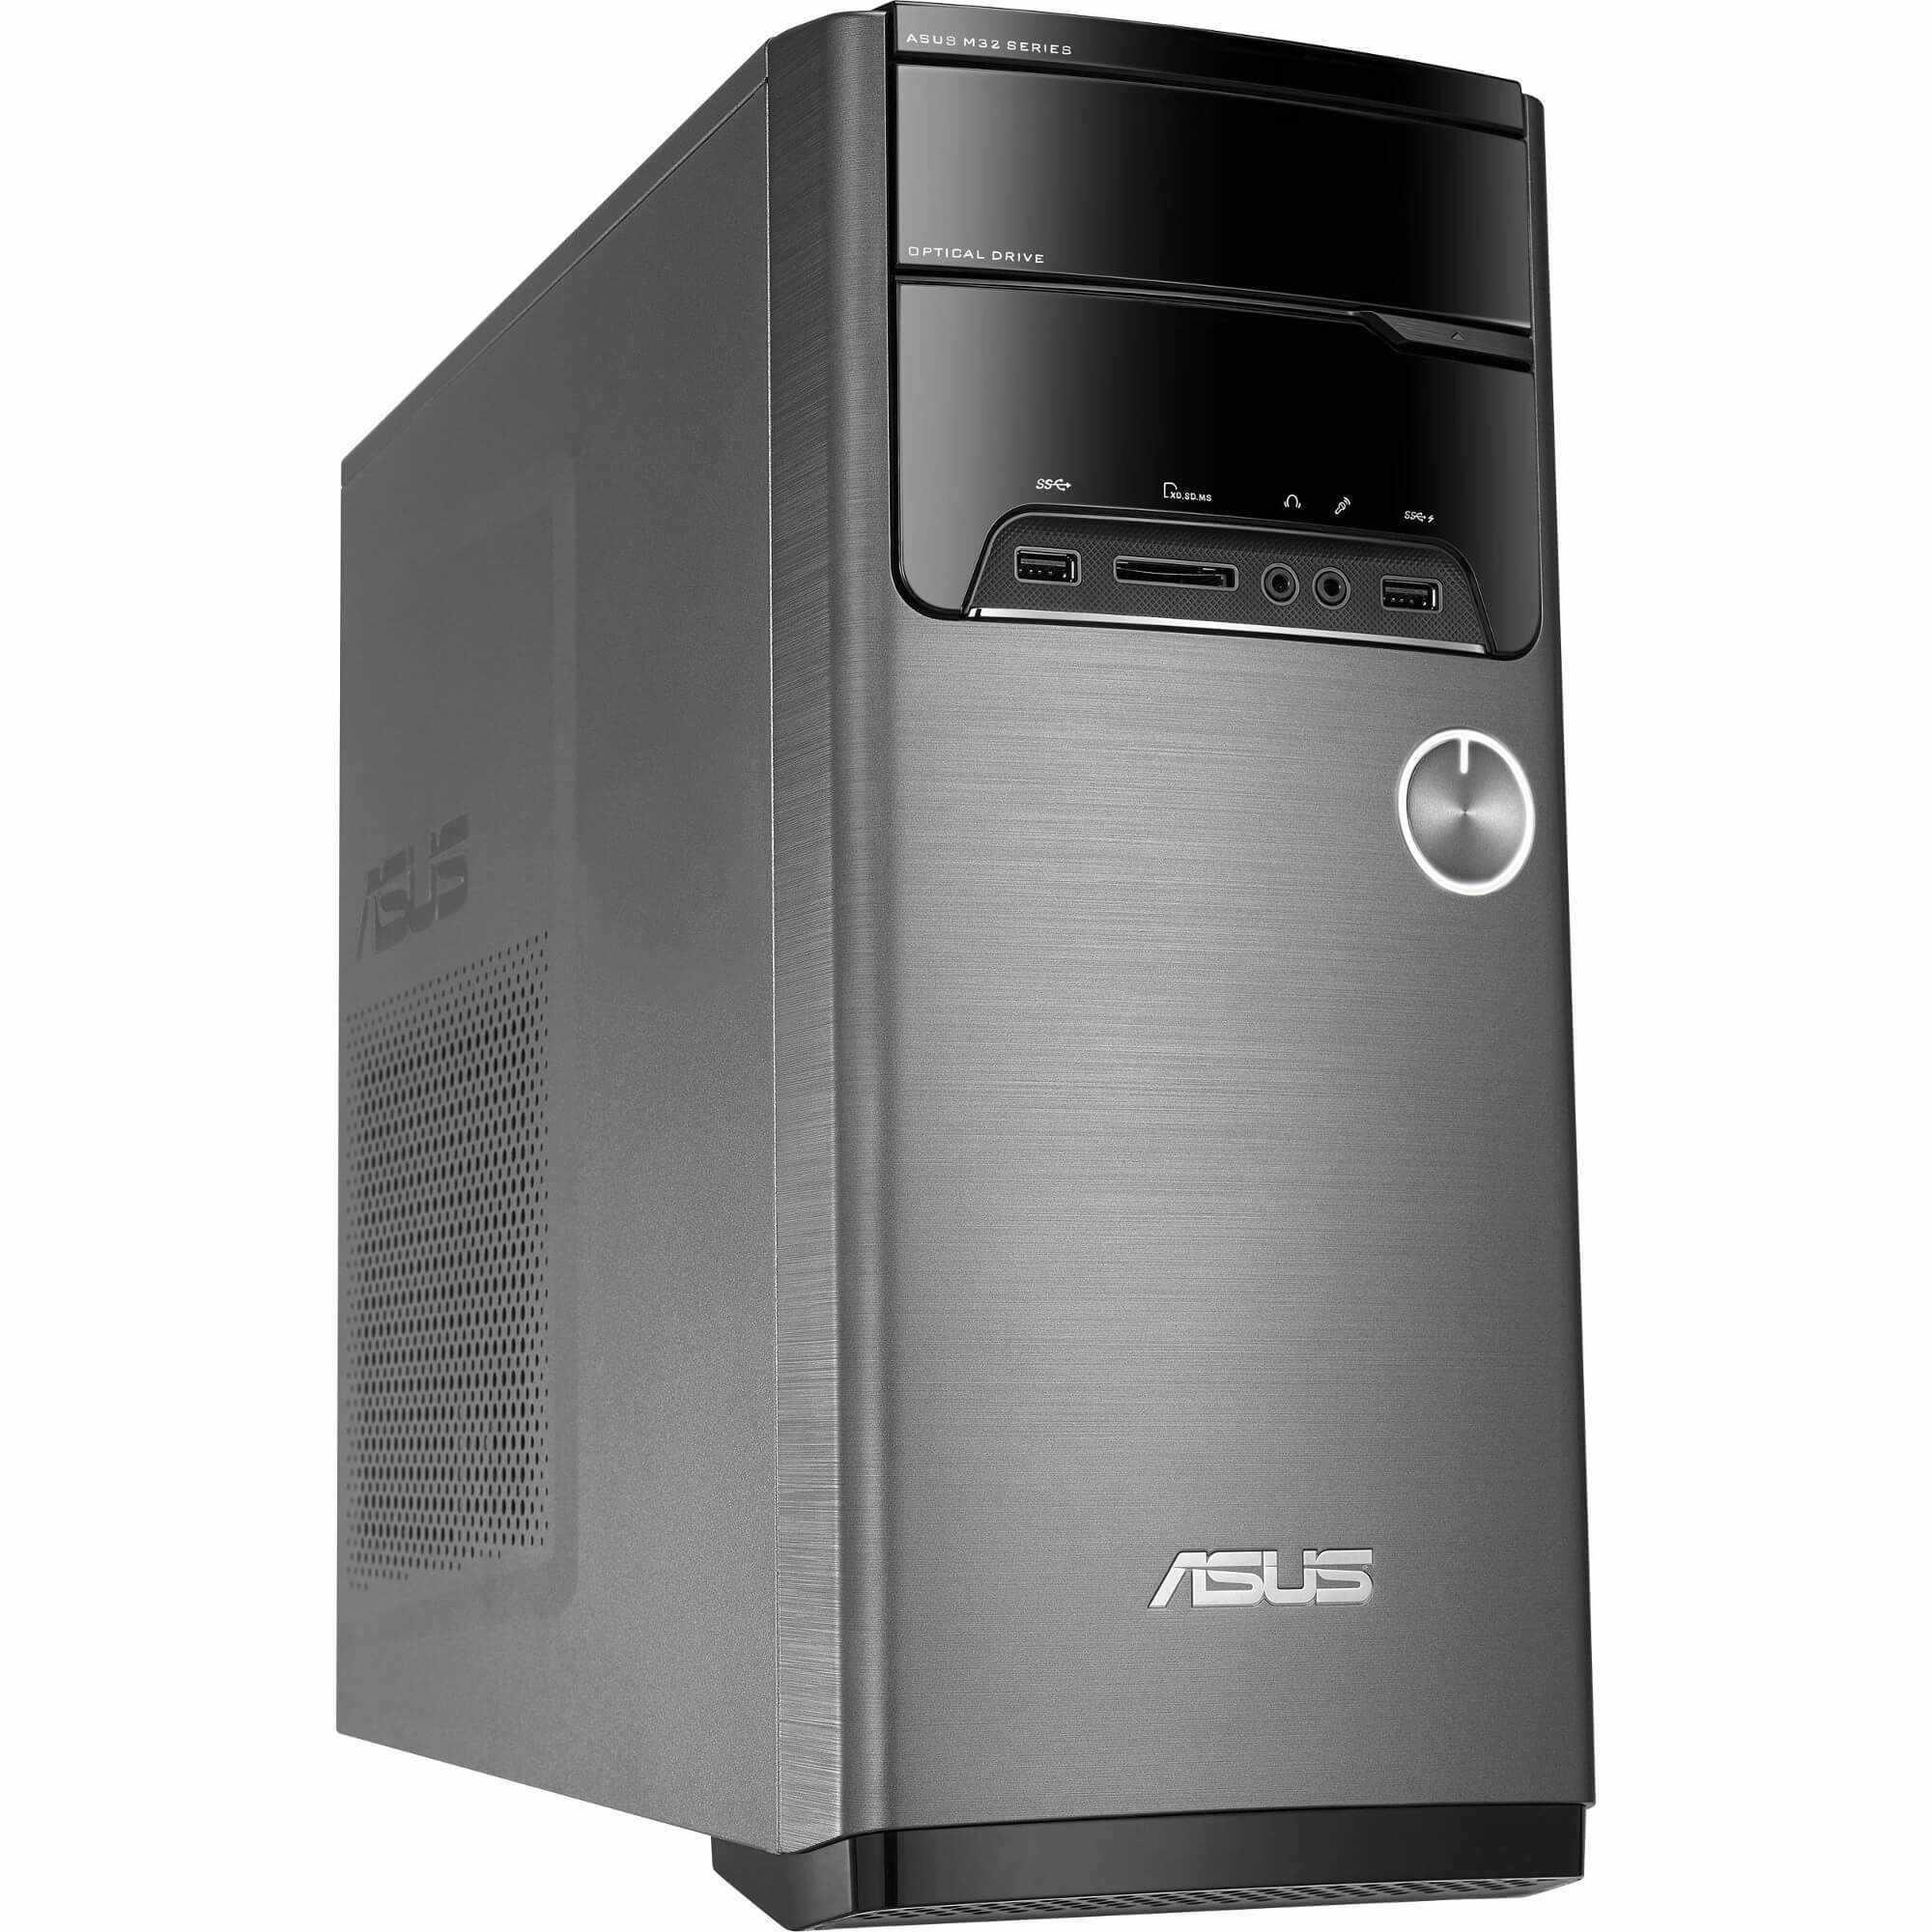 Sistem Desktop PC Asus M32CD, Intel Core i5-6400, 8GB DDR4, HDD 1TB, nVidia GeForce GTX 950M 2GB, Free DOS